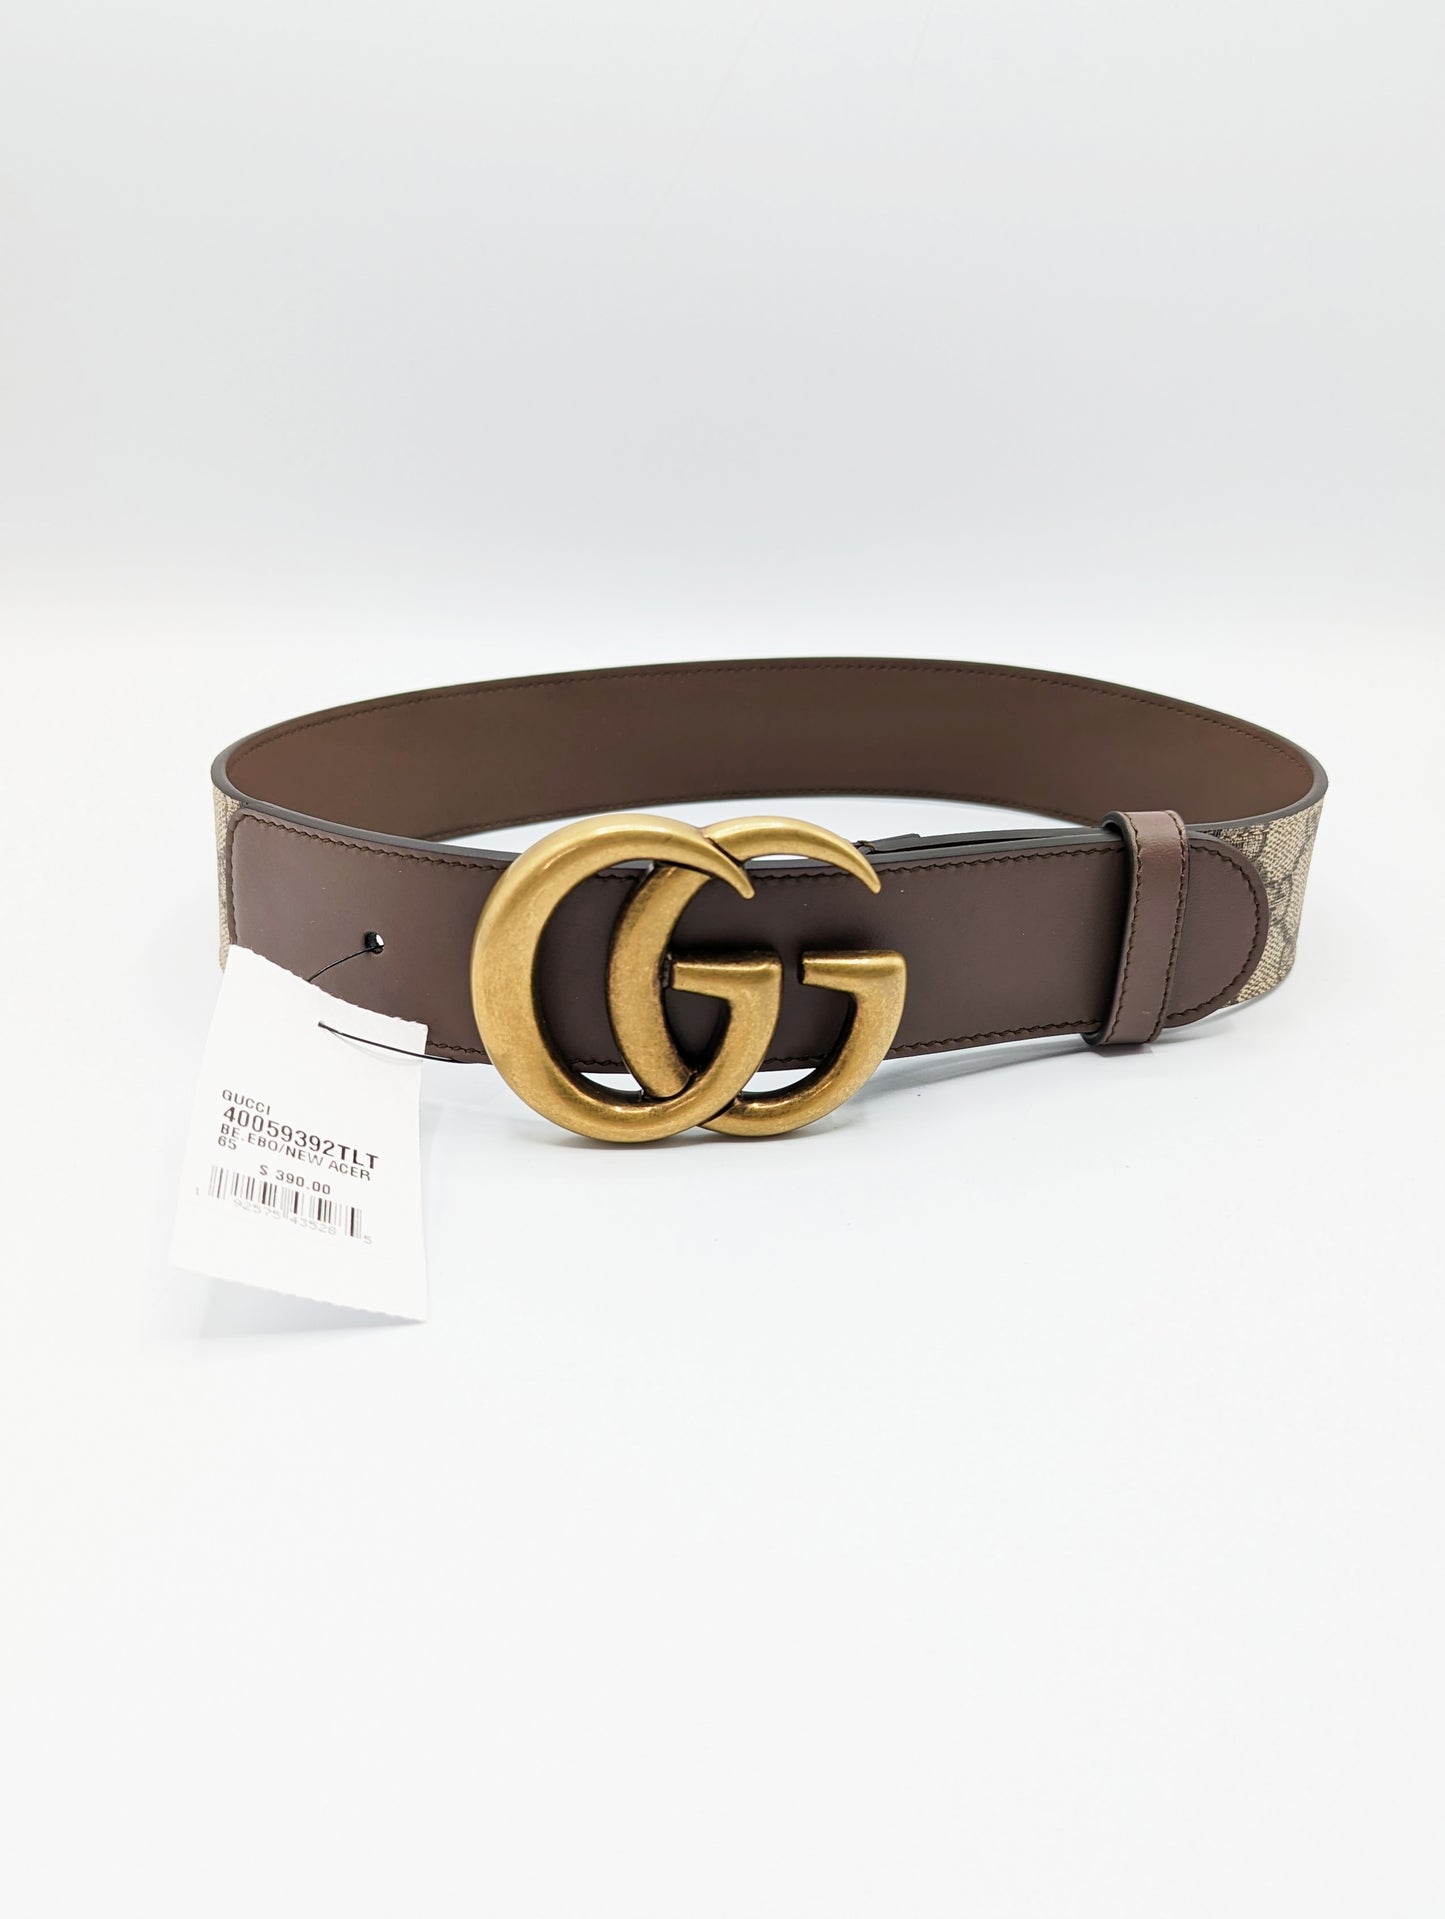 NWT Gucci Marmont Supreme Belt Size 65